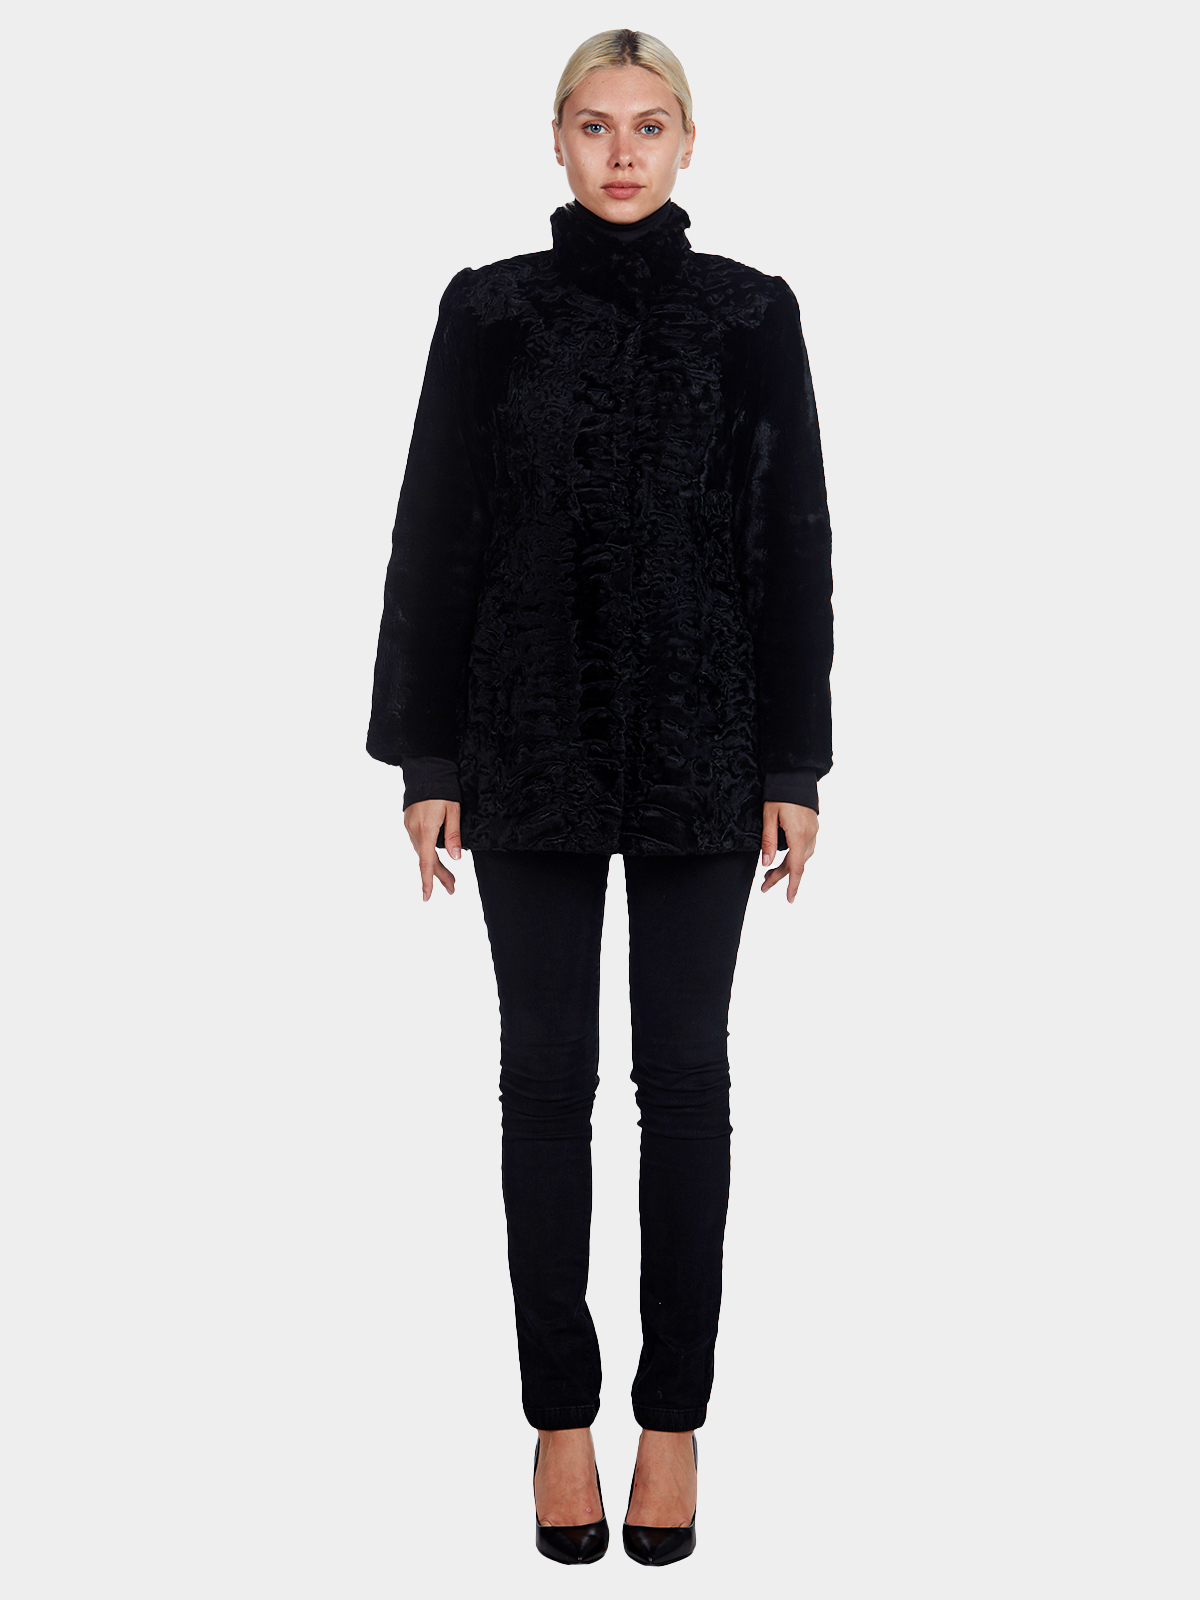 Black Broadtail Lamb Jacket - Women's Fur Jacket - Small| Estate Furs